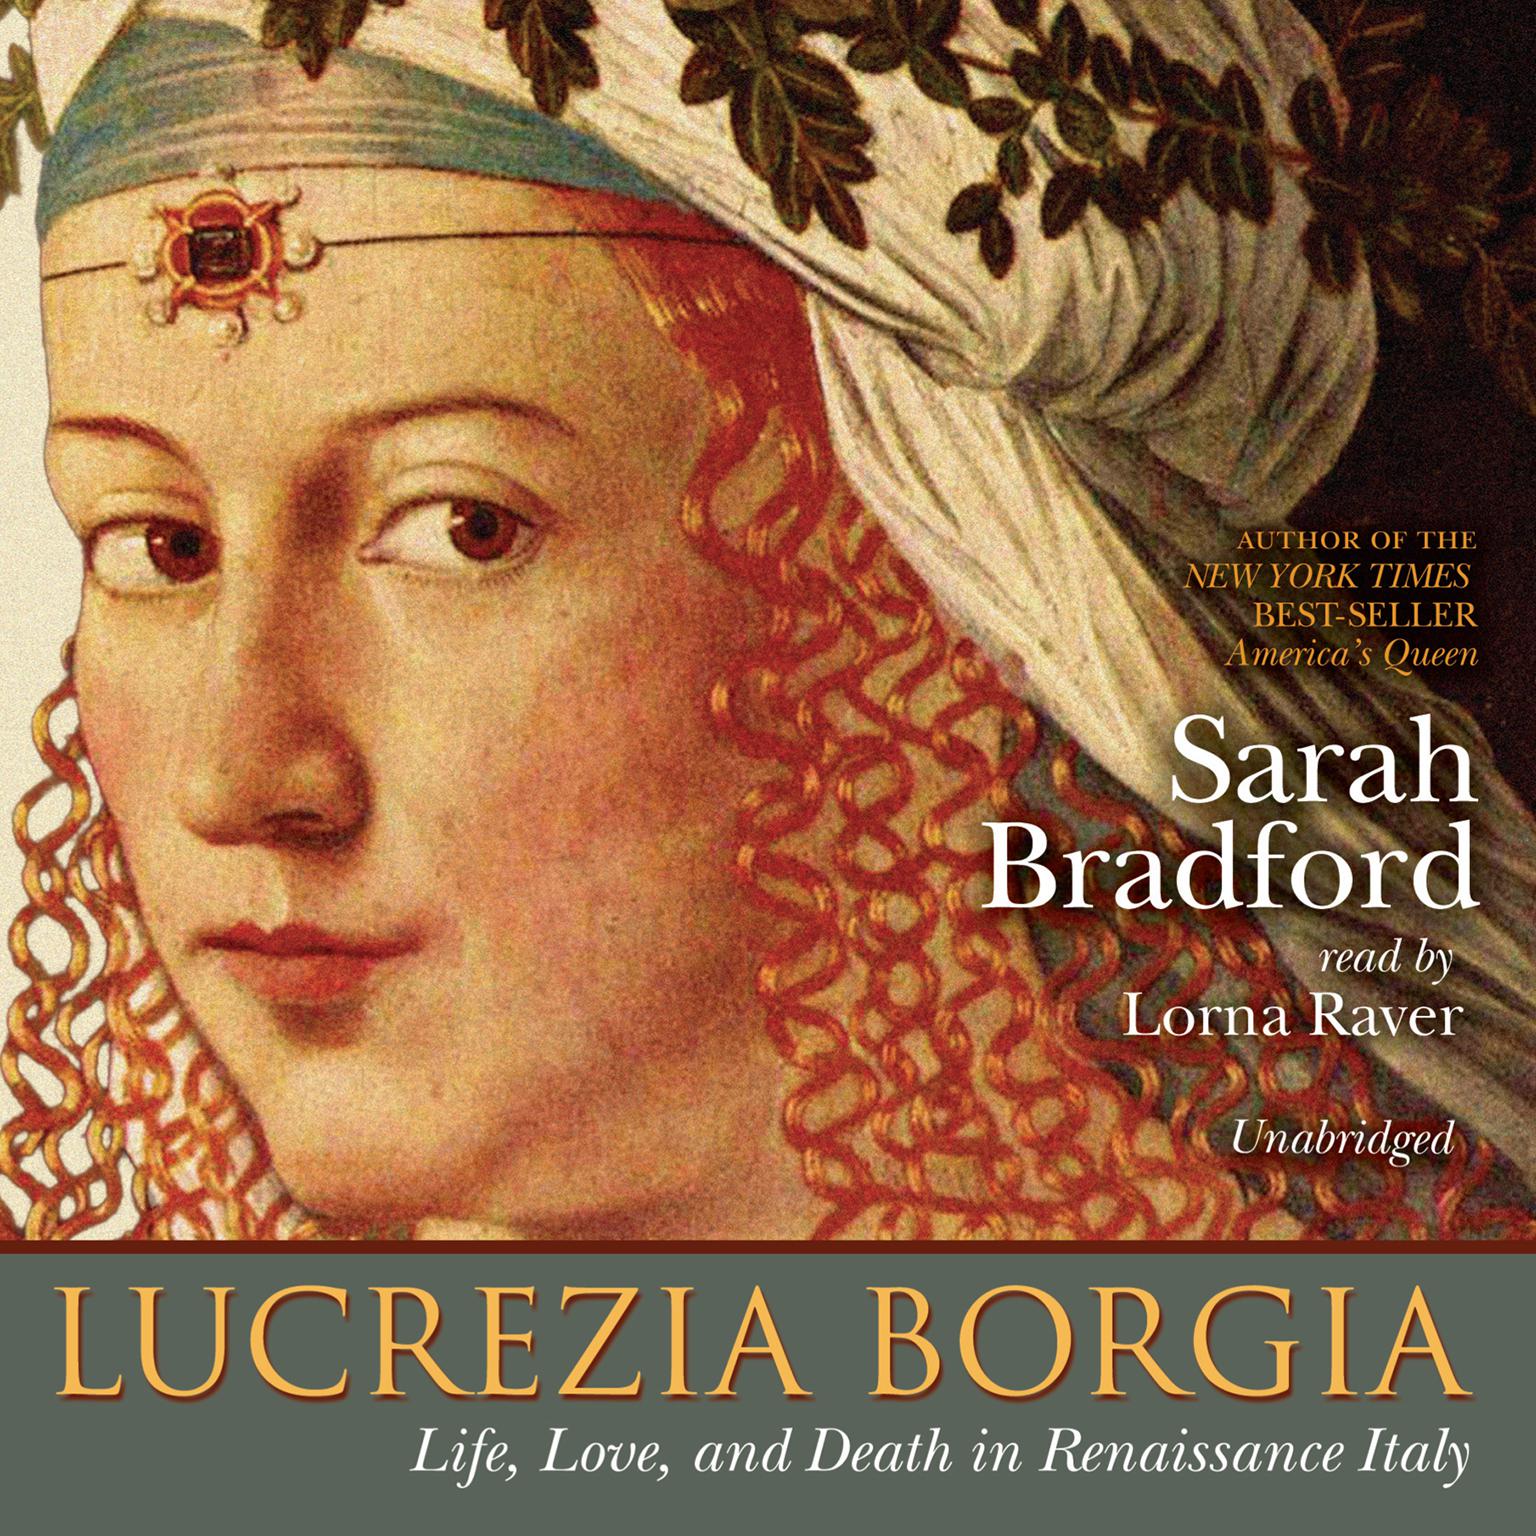 Lucrezia Borgia: Life, Love, and Death in Renaissance Italy Audiobook, by Sarah Bradford